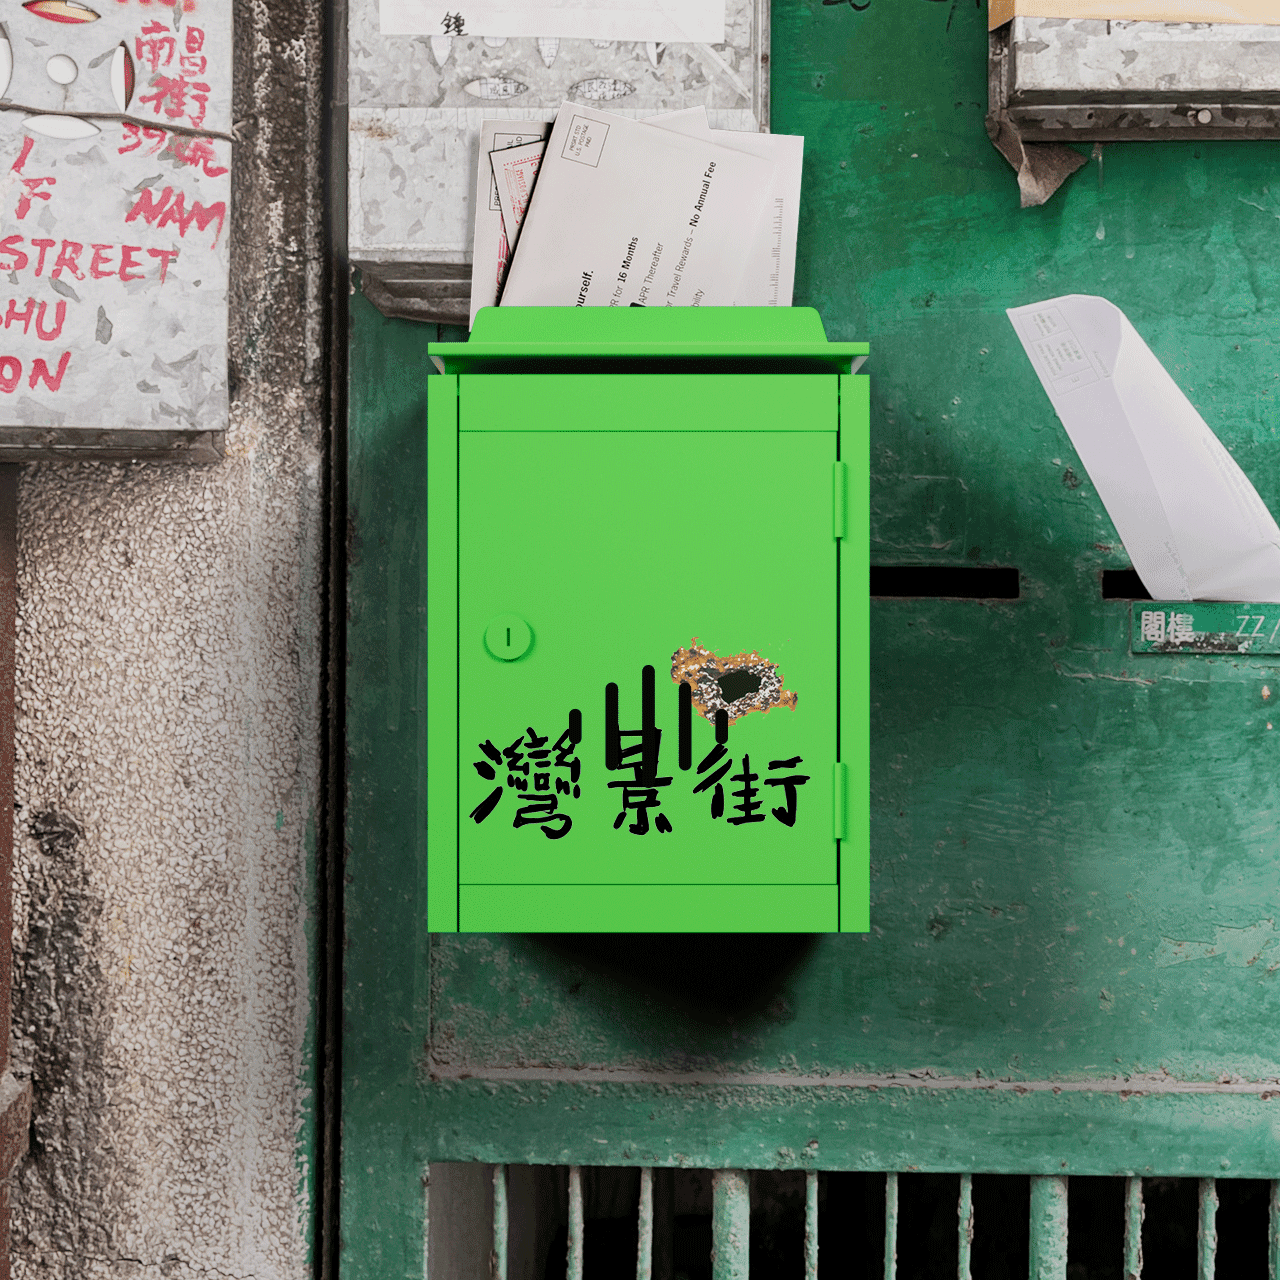 Letterbox #22